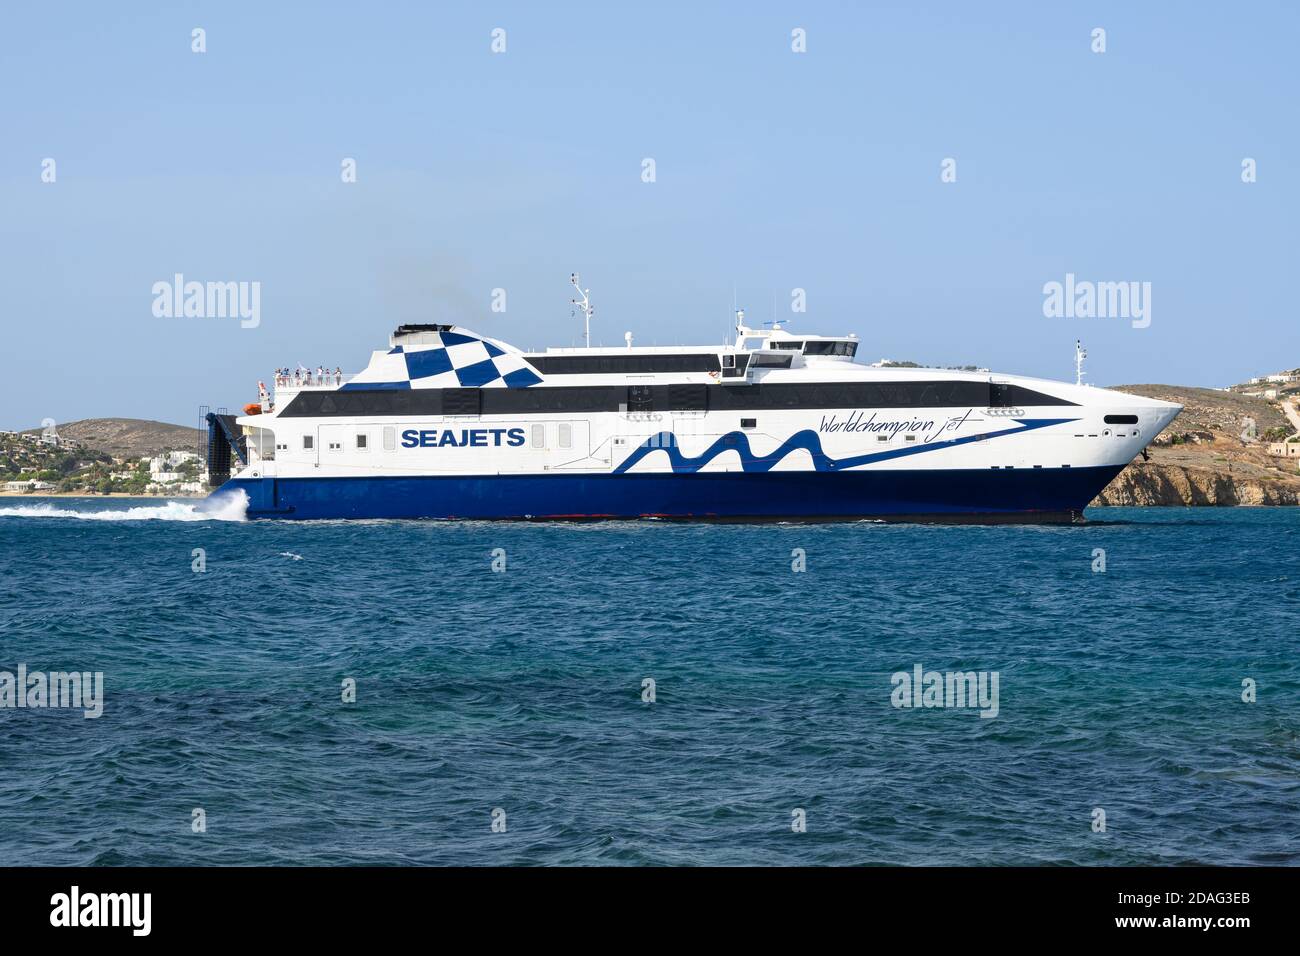 Paros, Greece - September 27, 2020: WorldChampion Jet Seajets, one of the  fastest high-speed ferries in the world. Paros island, Greece Stock Photo -  Alamy